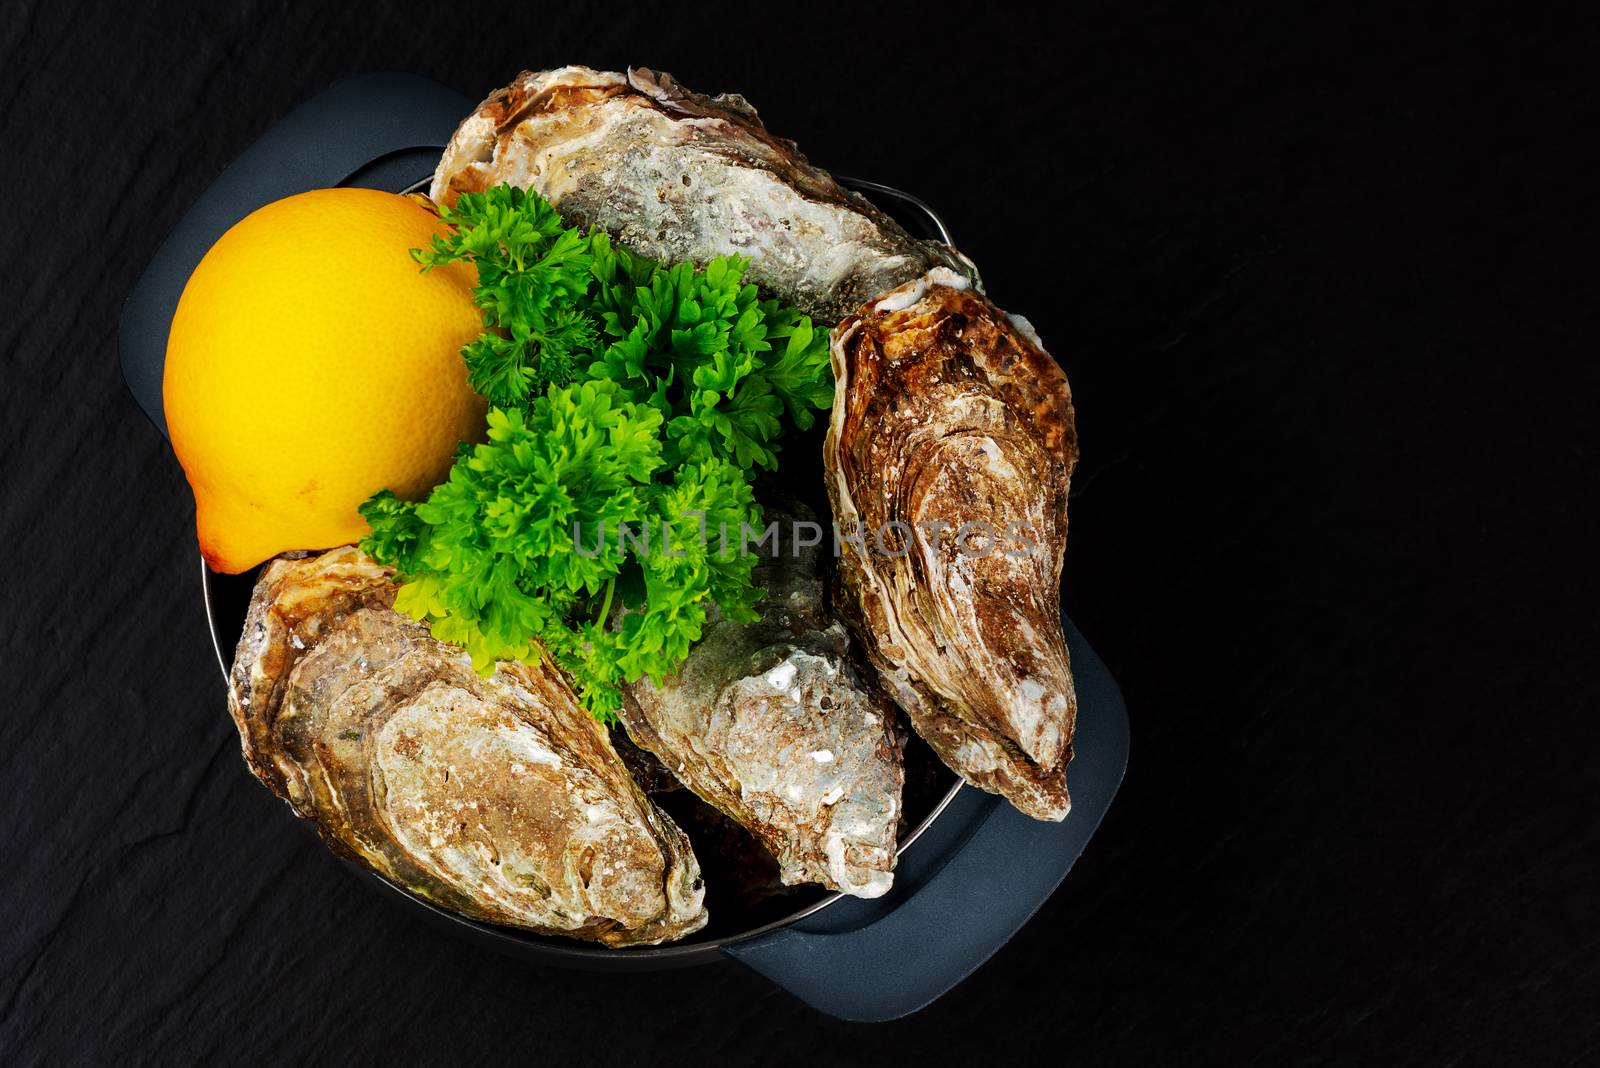 Raw oysters by Nanisimova